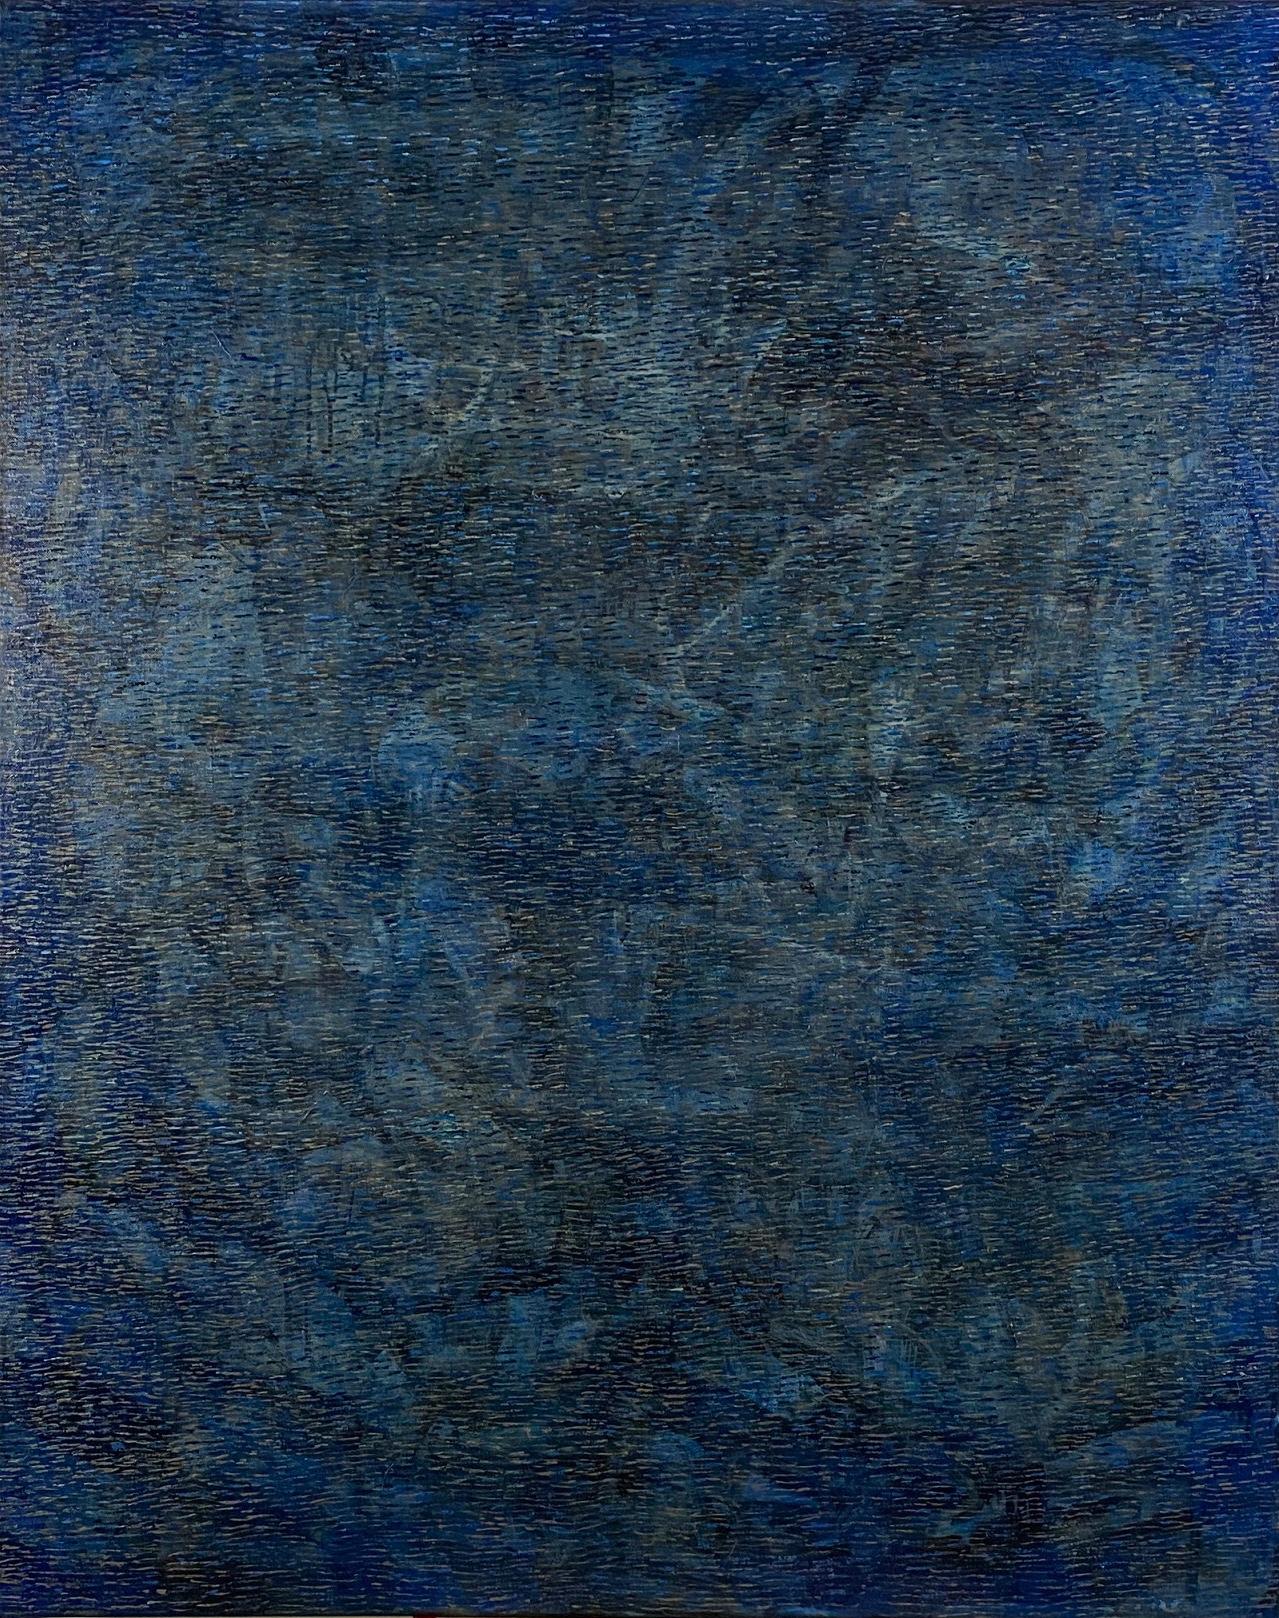 Agnieszka Korejba Figurative Painting - True Blue - Contemporary Conceptual Abstract,  Minimalistic Oil Painting